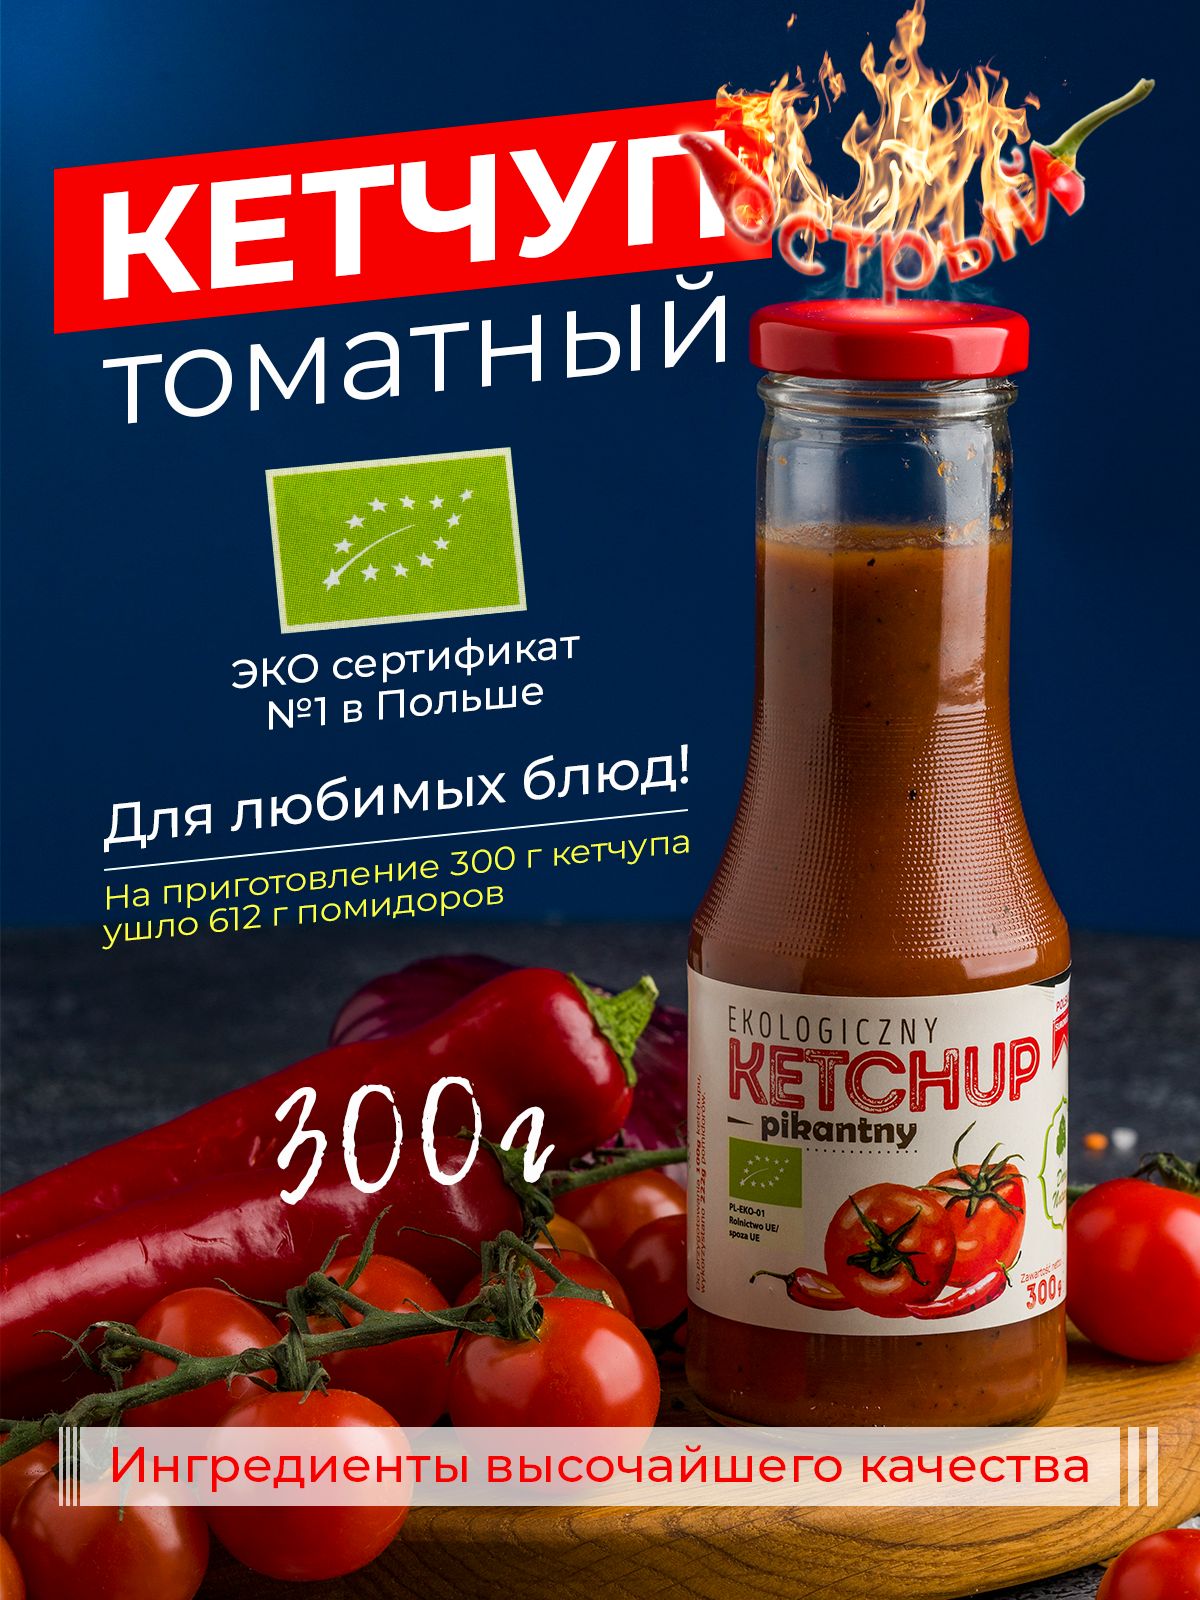 Производители кетчупов — 10 заводов и фабрик